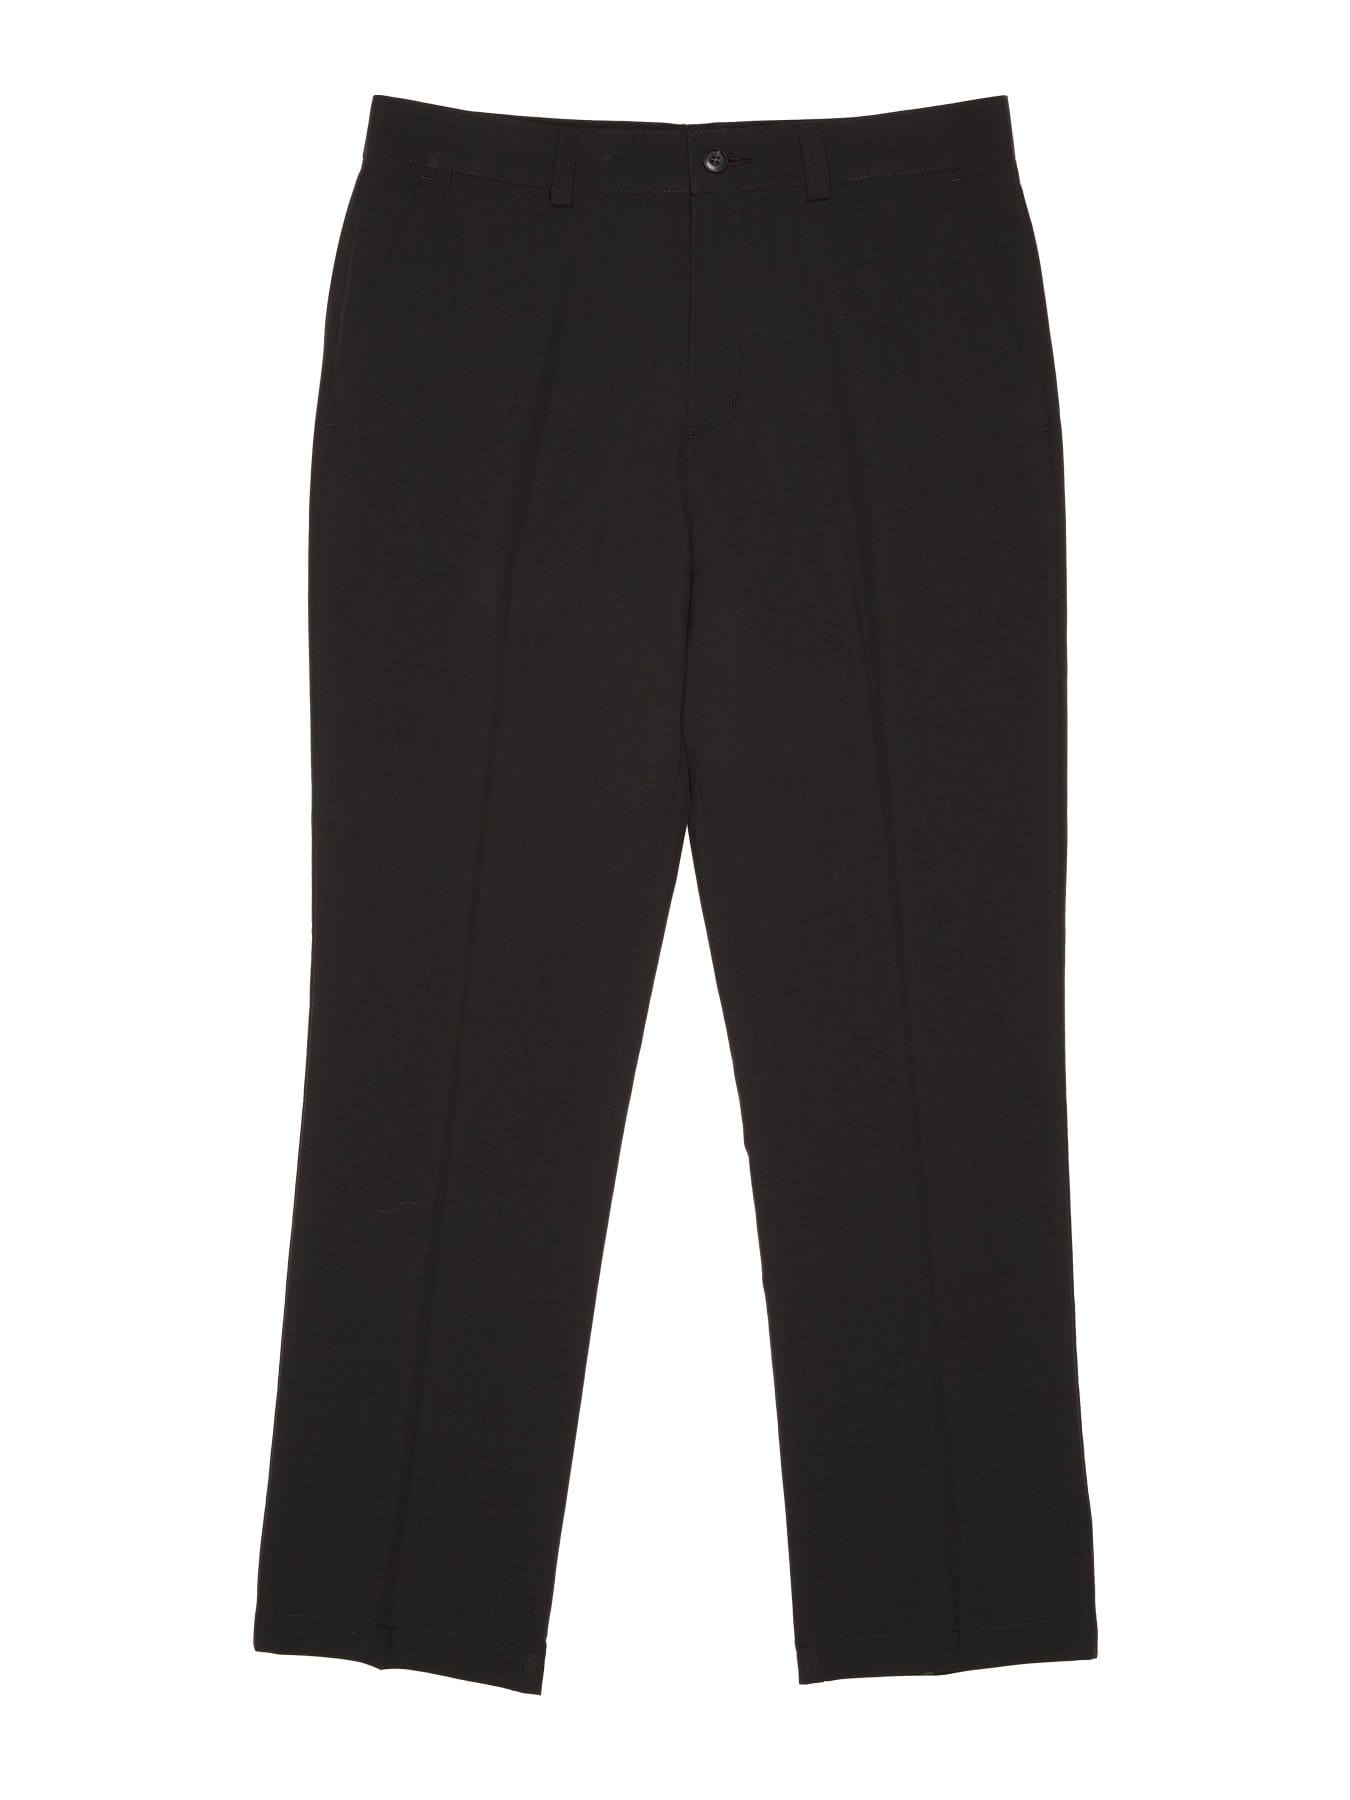 PGA TOUR Apparel Boys Flat Front Solid Pants, Size Medium, Black, Polyester/Elastane | Golf Apparel Shop